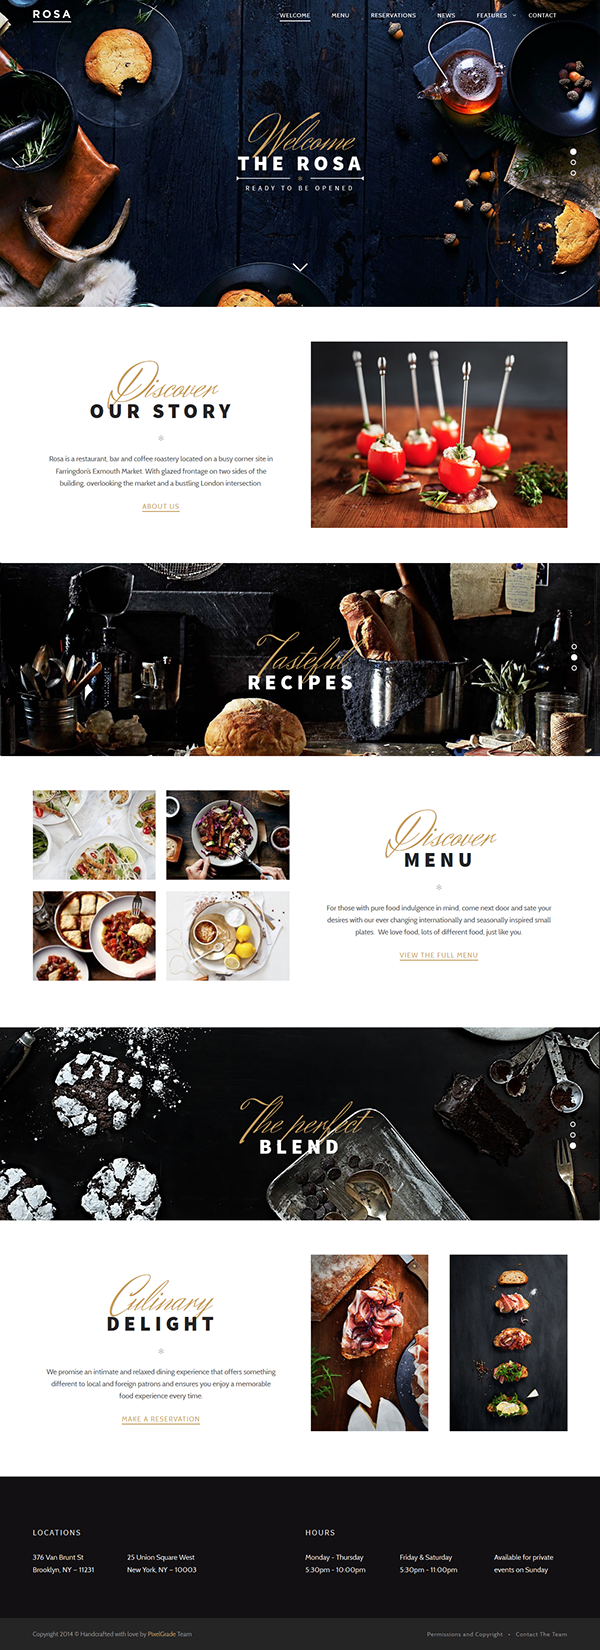  ROSA - An Exquisite Restaurant WordPress Theme